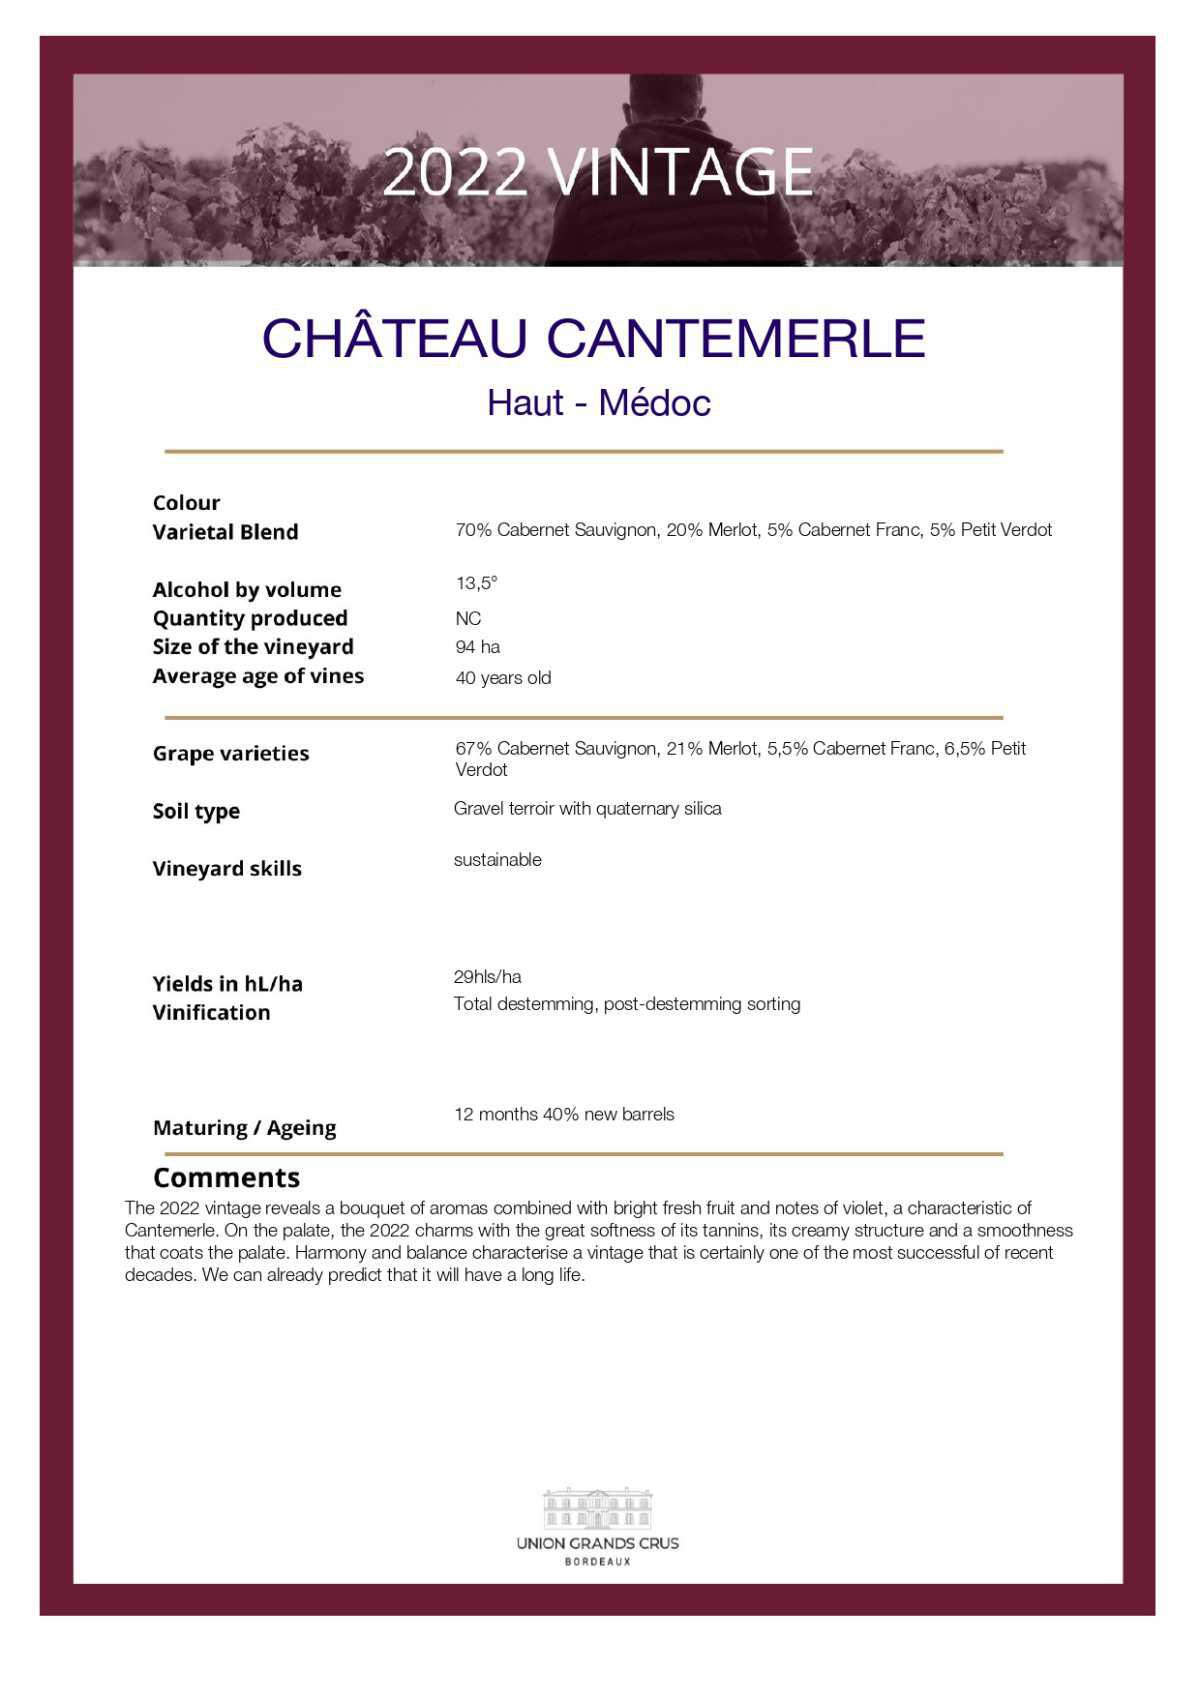  Château Cantemerle